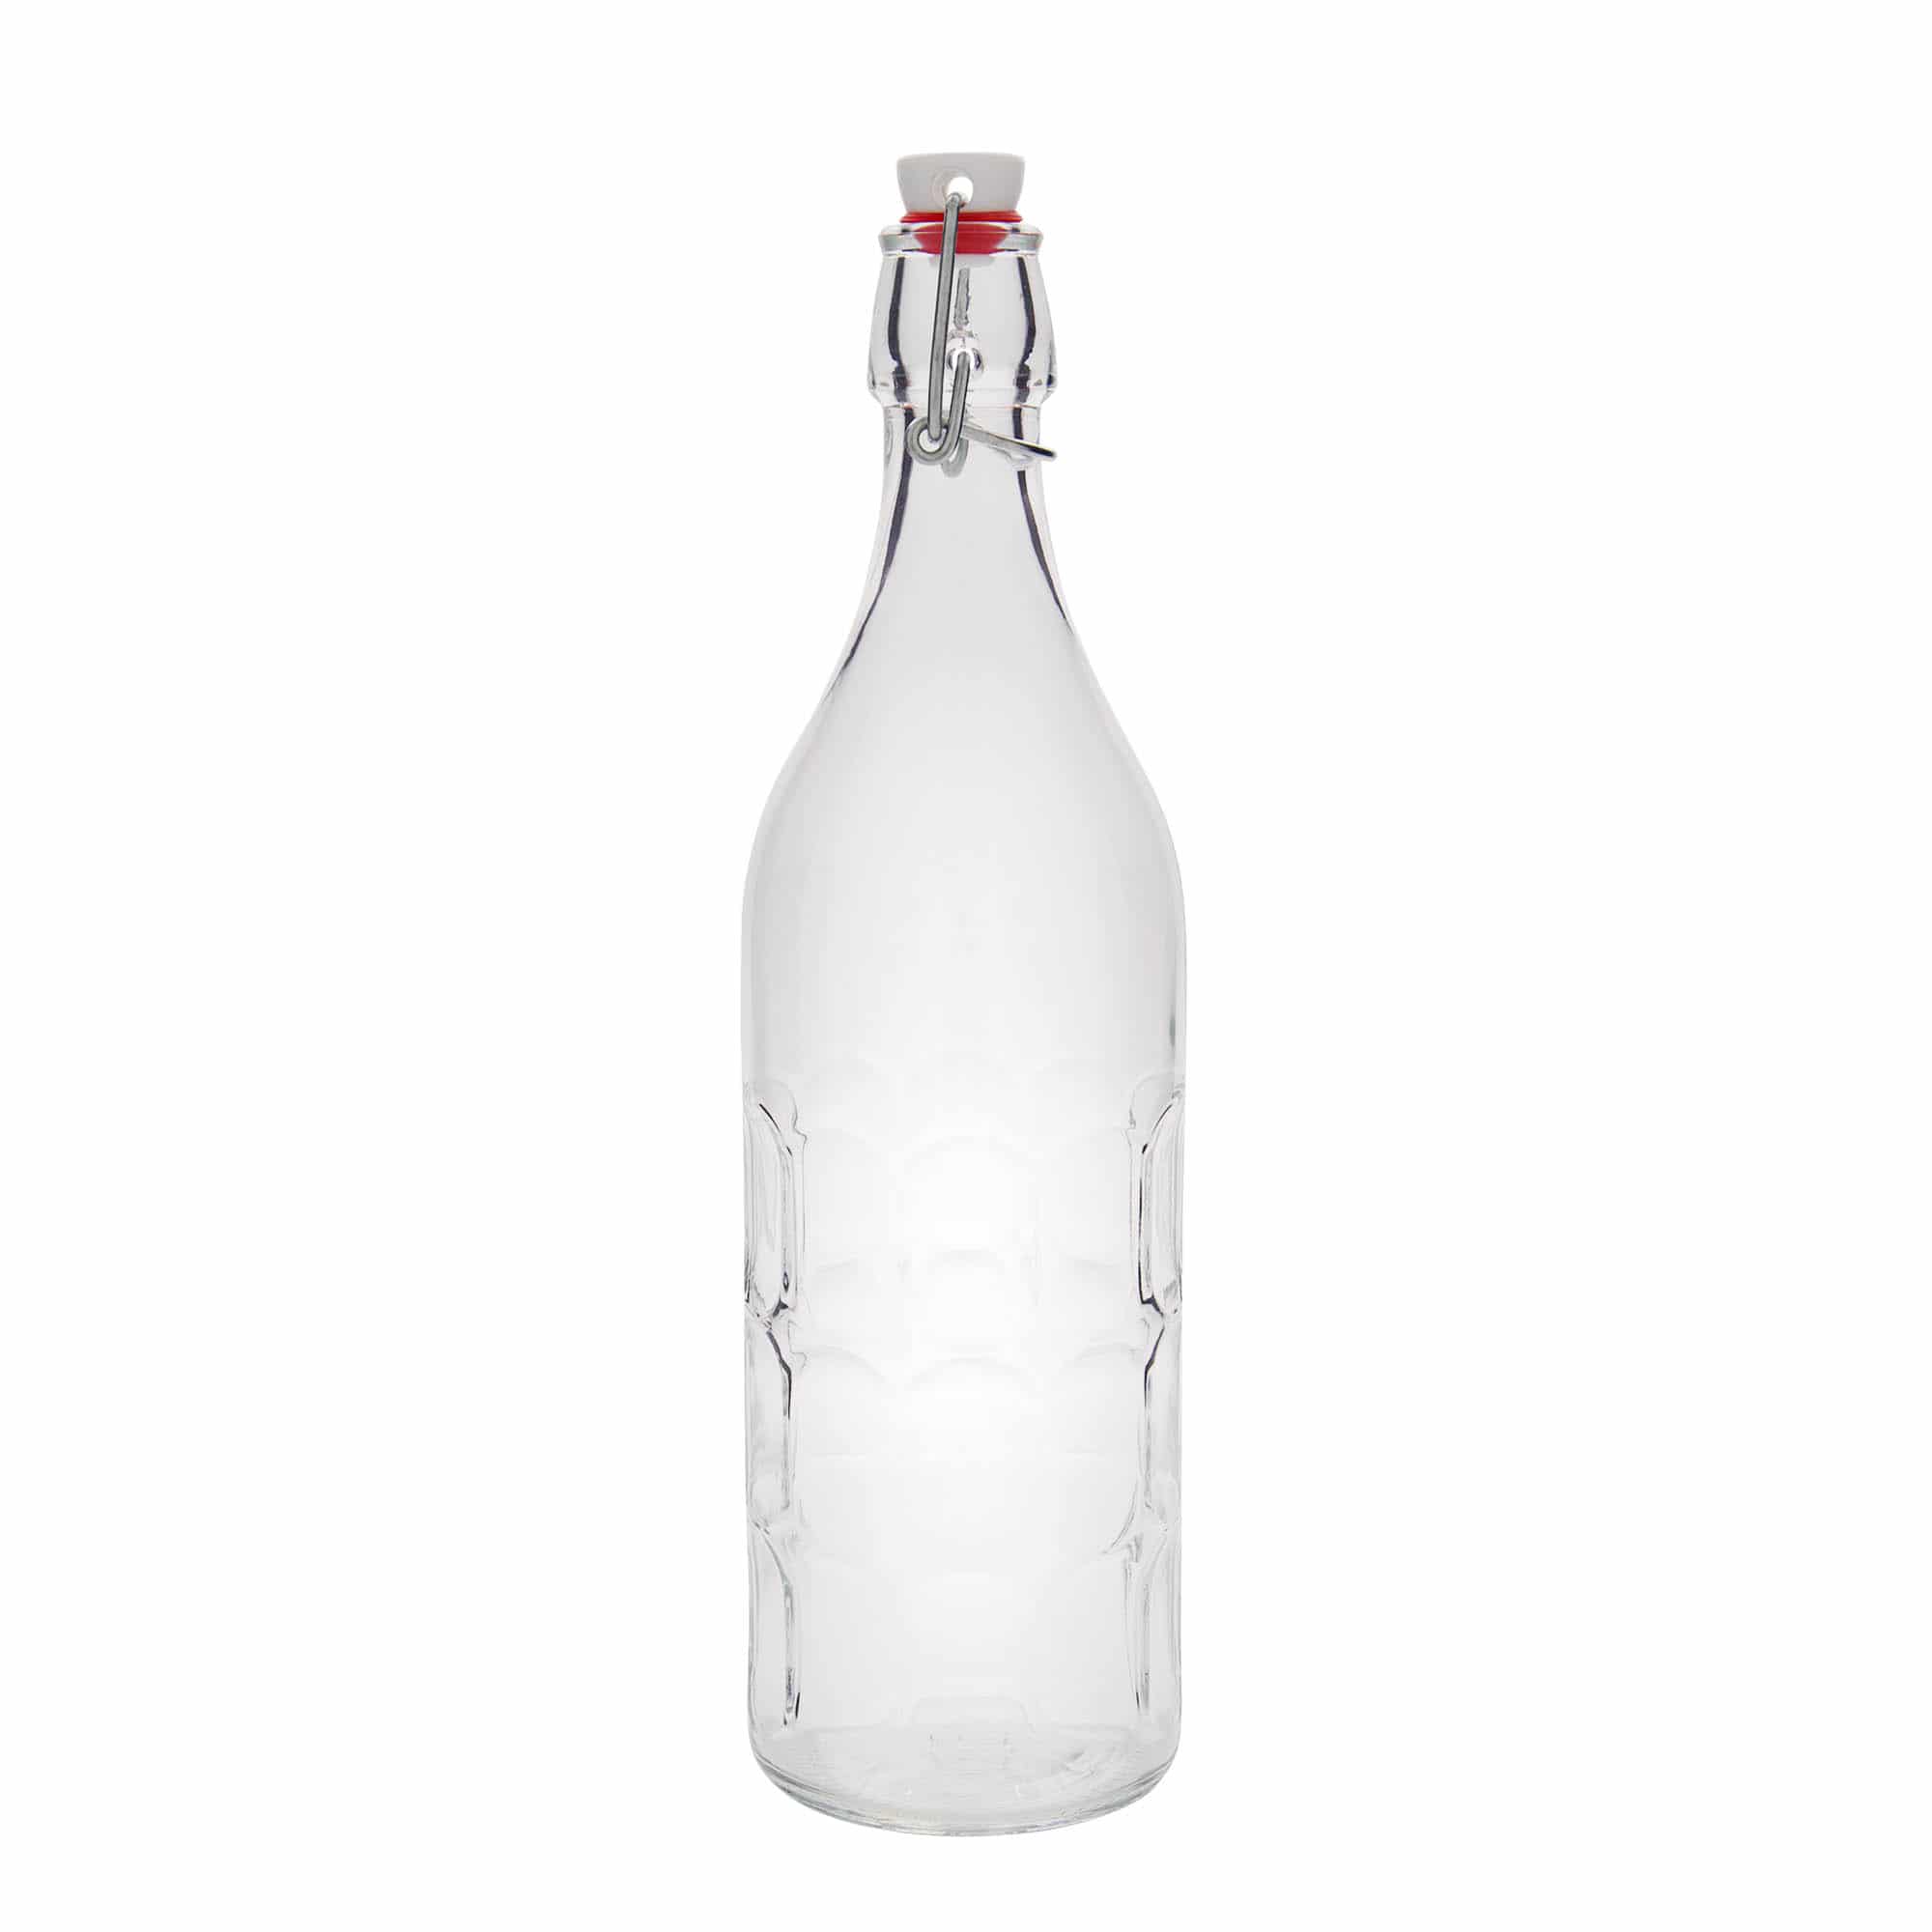 1,000 ml glass bottle ‘Moresca’, closure: swing top